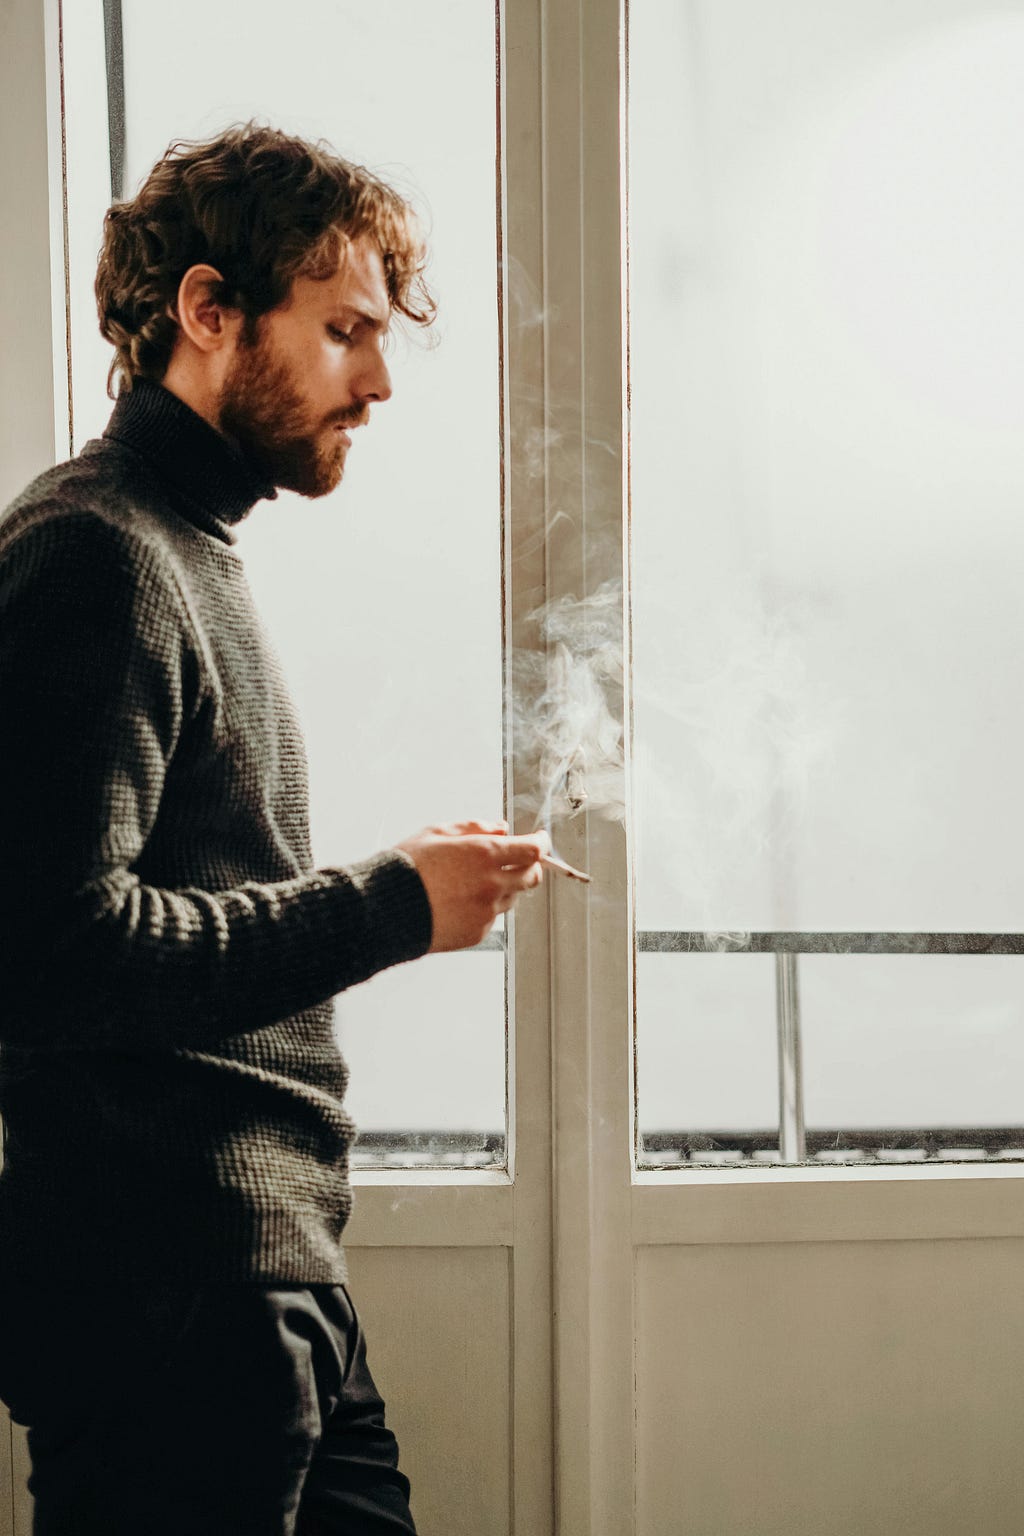 An adult smoking cigerette in tension near a full length window pane